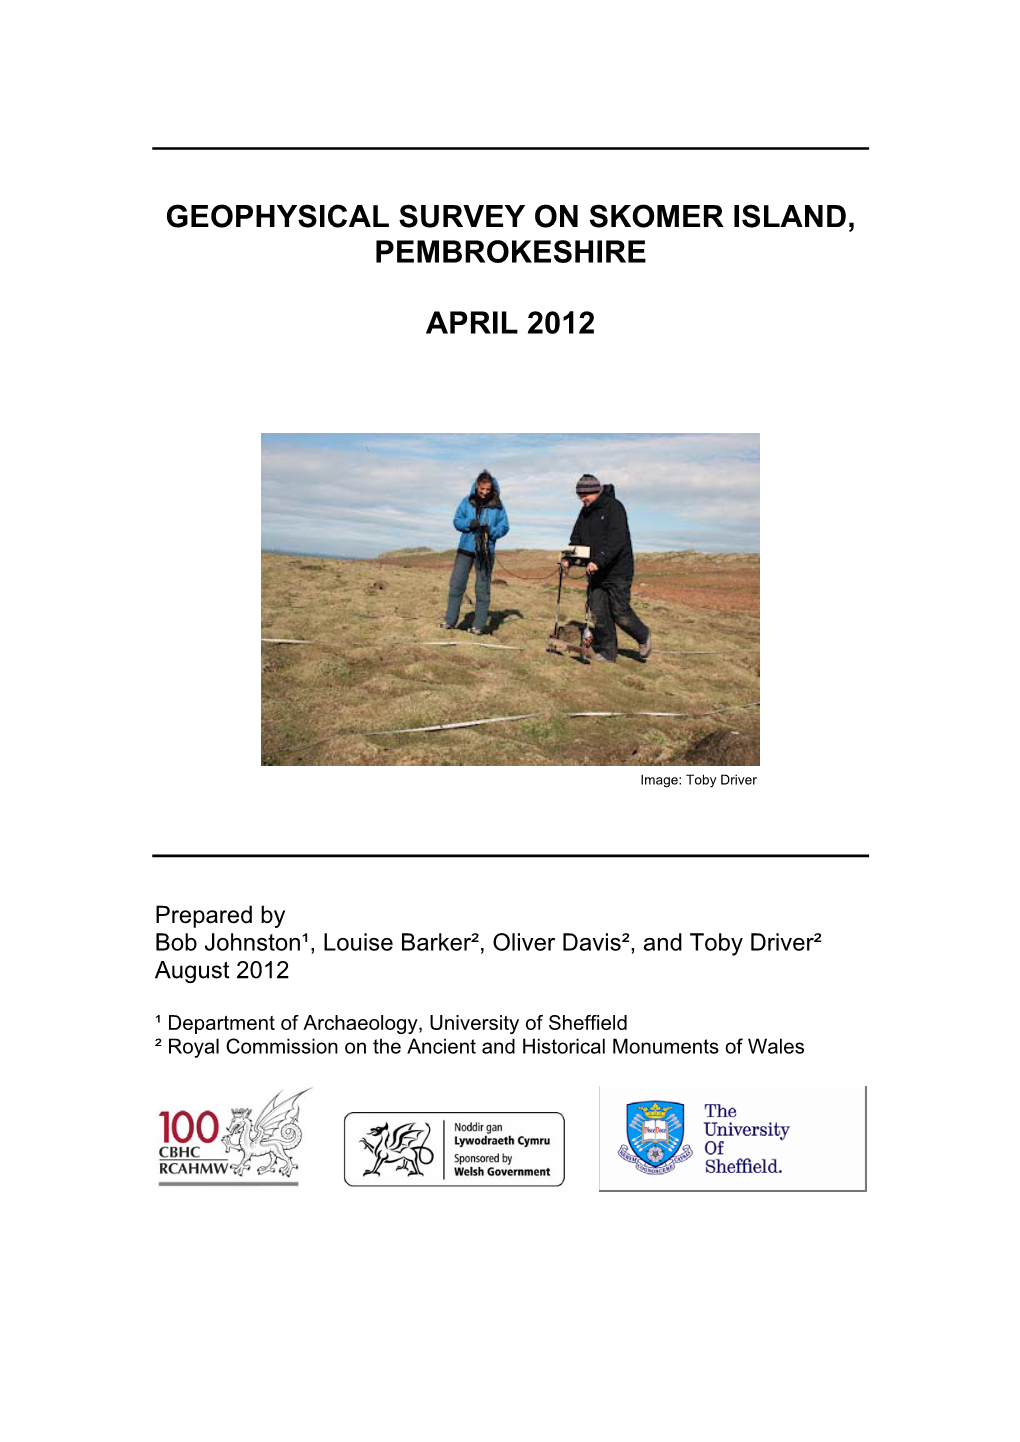 Geophysical Survey on Skomer Island, Pembrokeshire